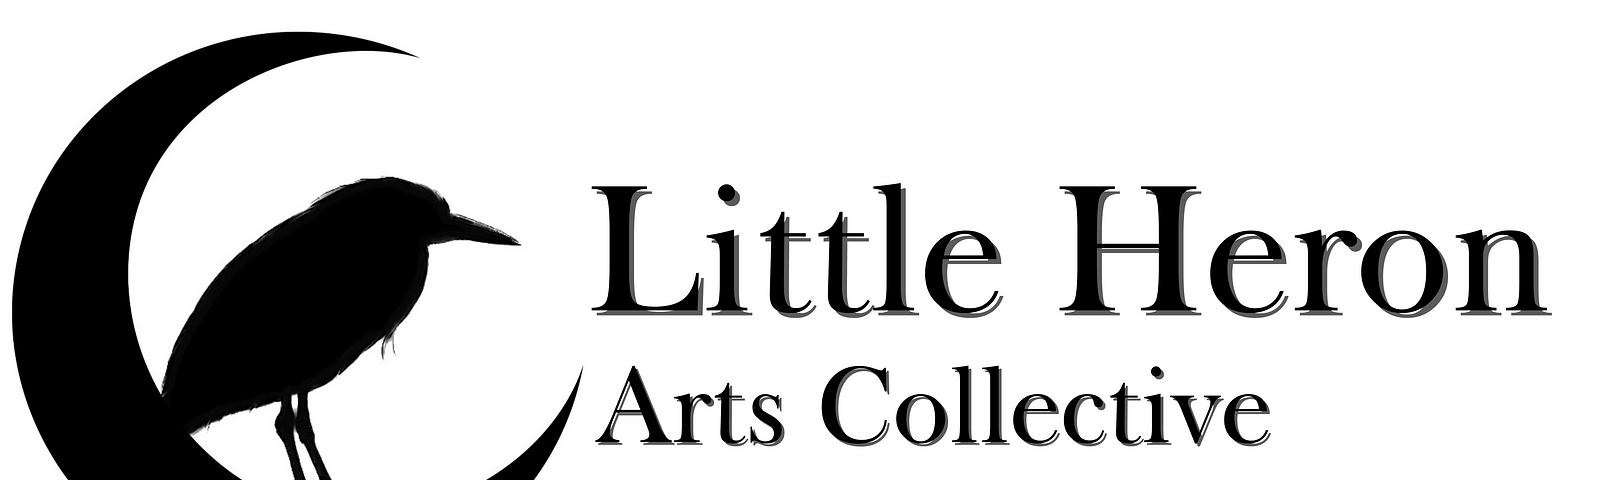 Little Heron Arts Collective logo